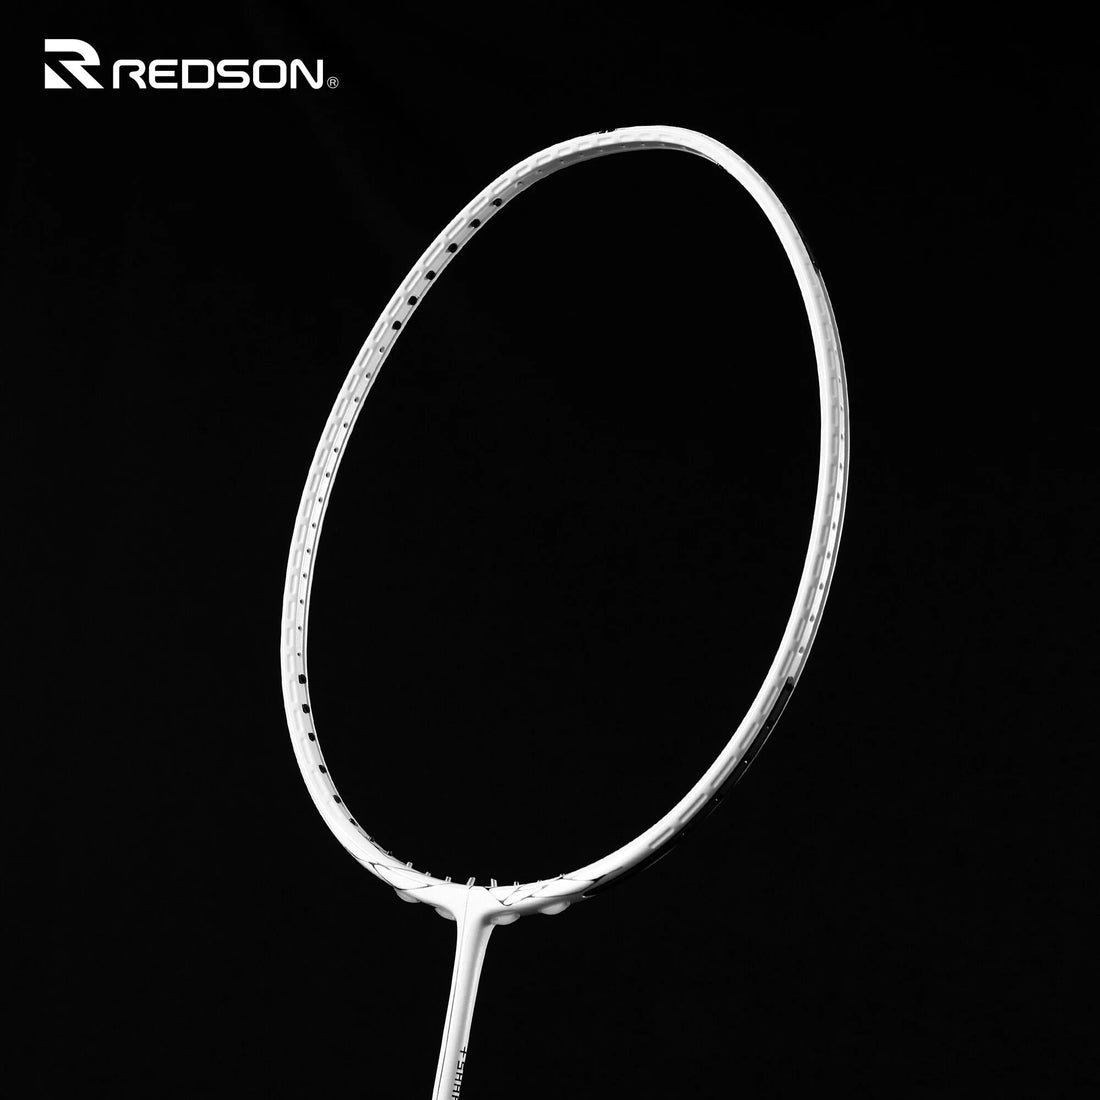 Redson Shape SG Badminton Racket [White](PRE-ORDER)